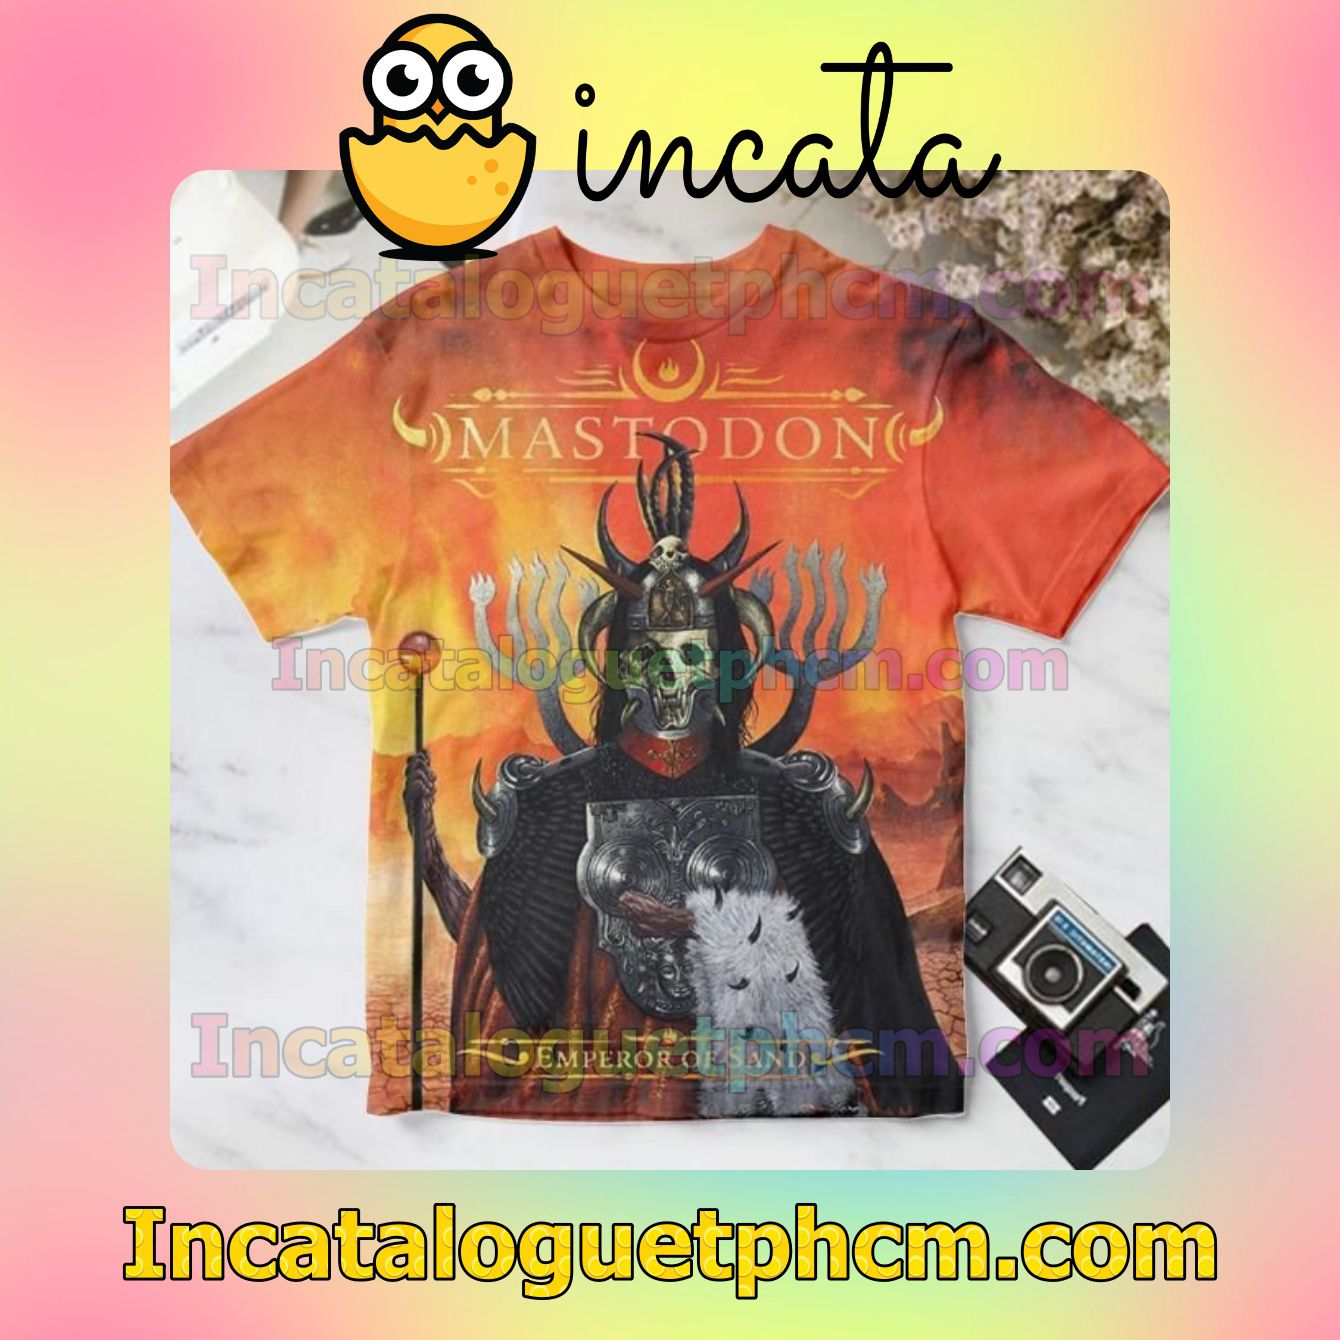 Mastodon Emperor Of Sand Album Cover Personalized Shirt